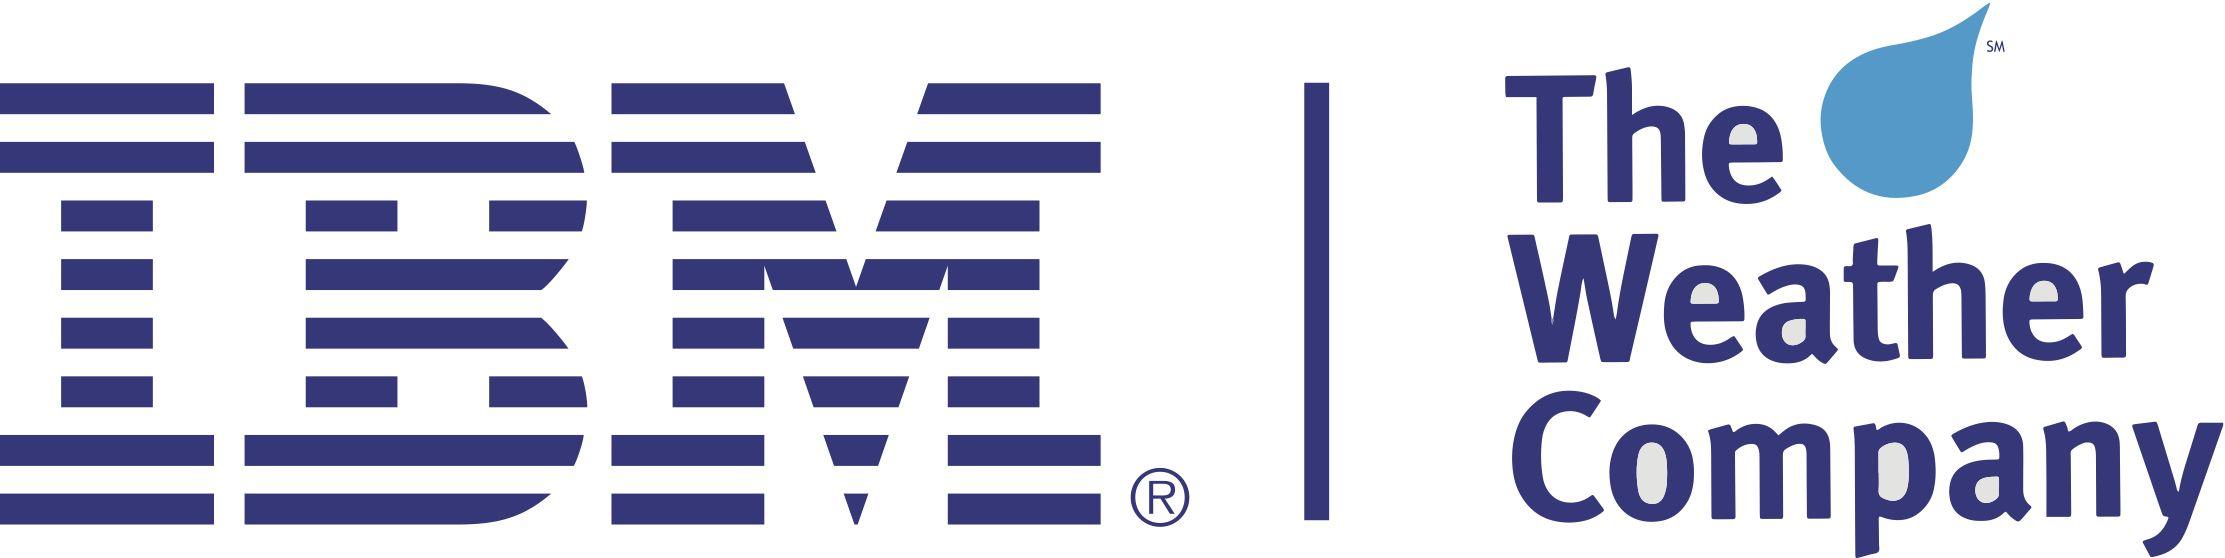 IBM Company Logo - IBM News room - IBM and The Weather Company Logo - United States